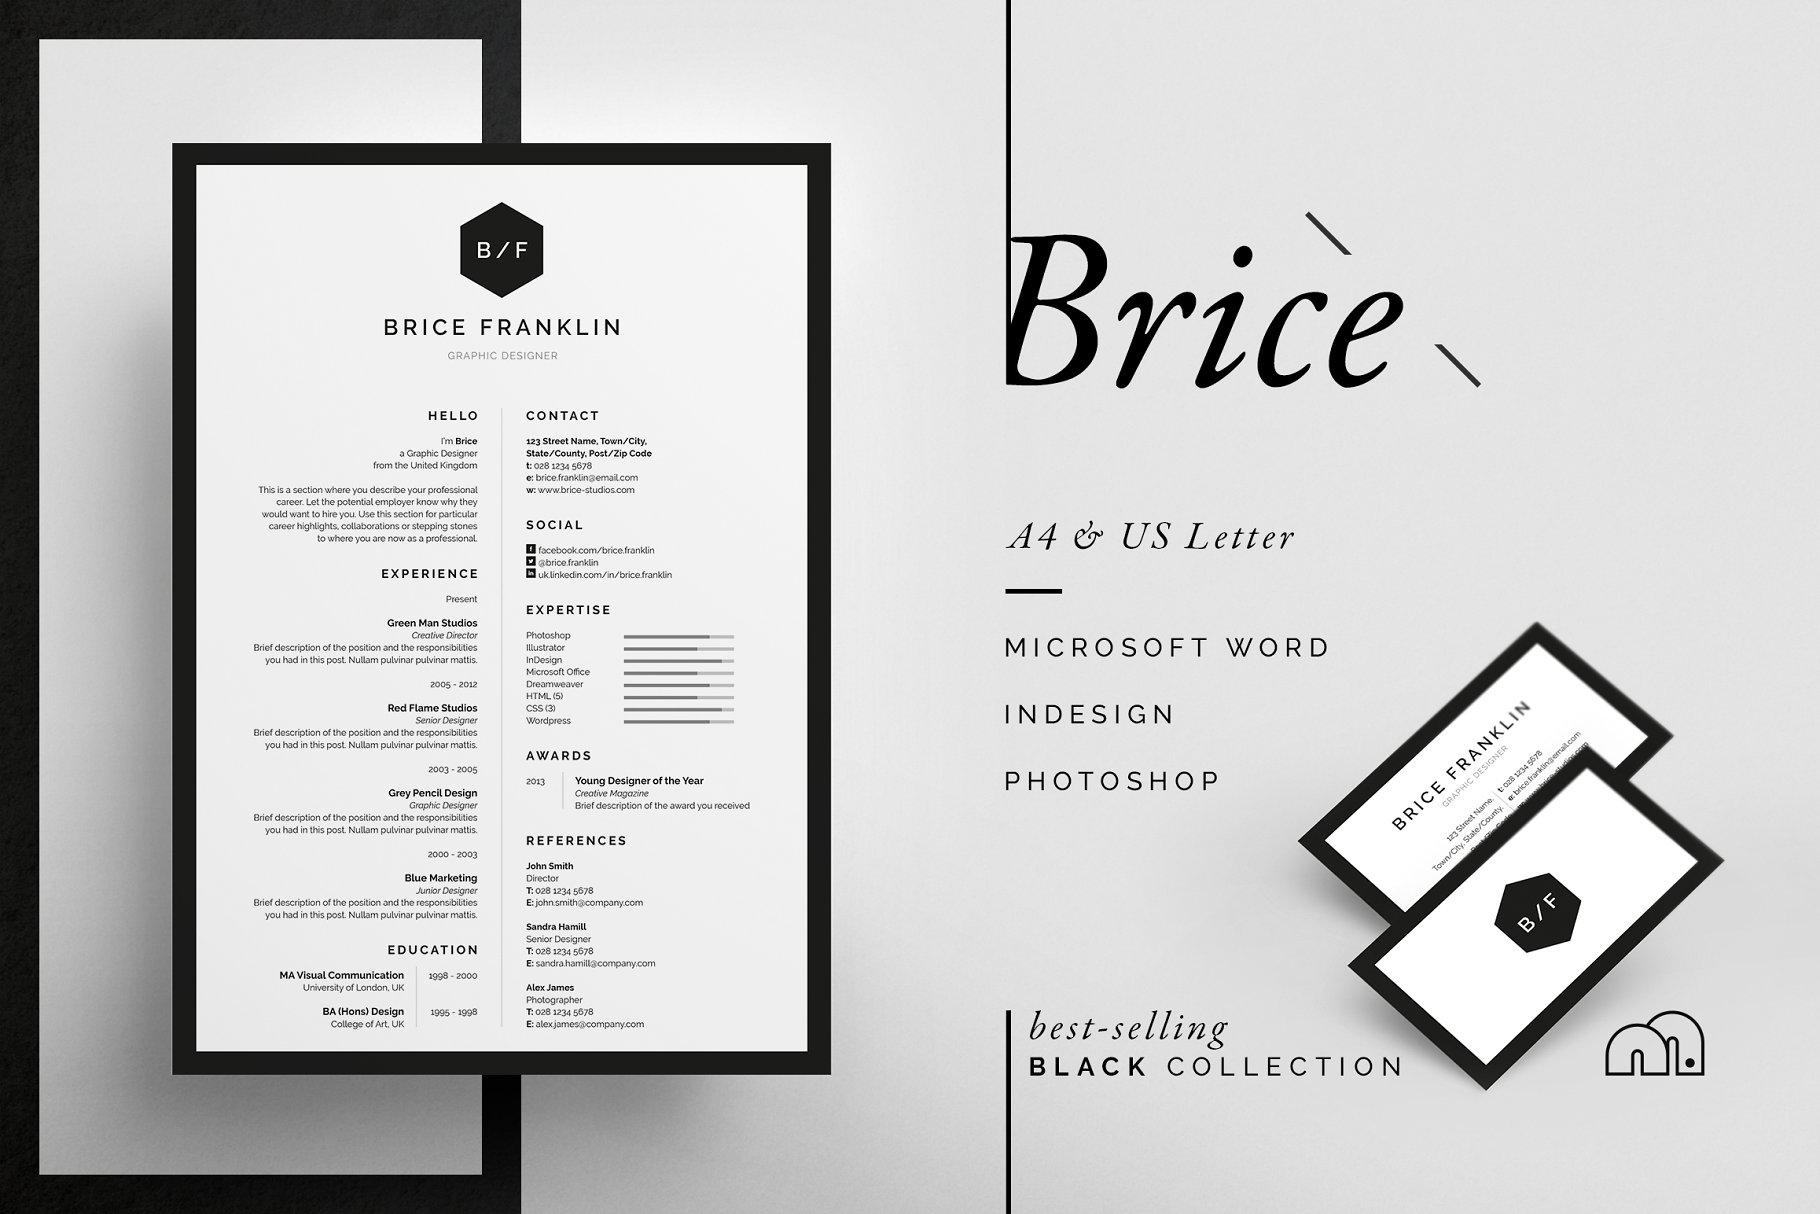 高端简历模板 Brice – Resume CV #1340